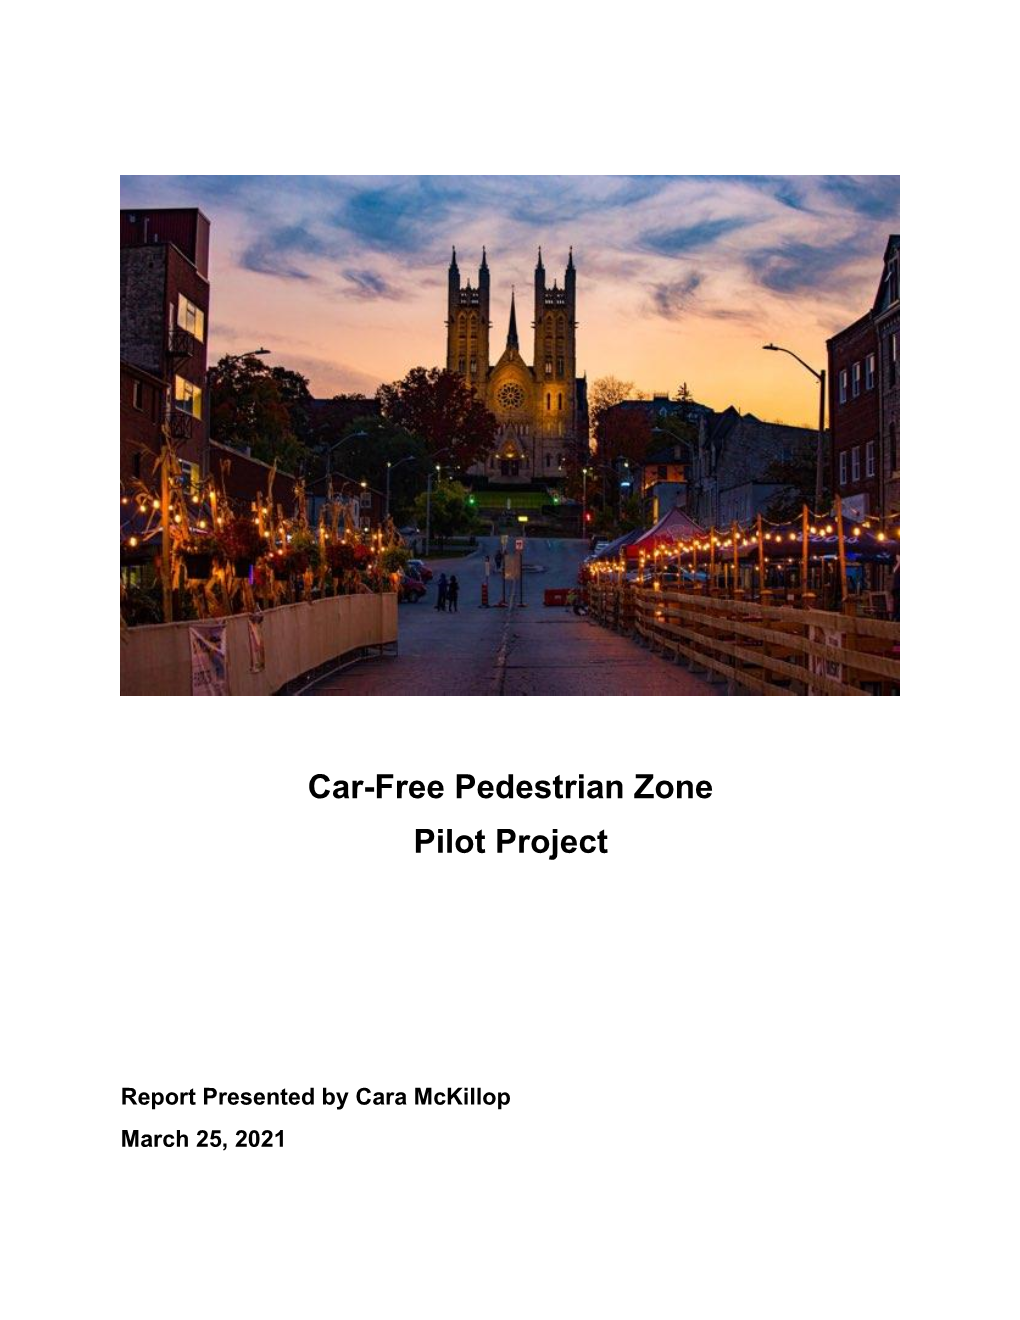 Car-Free Pedestrian Zone Pilot Project